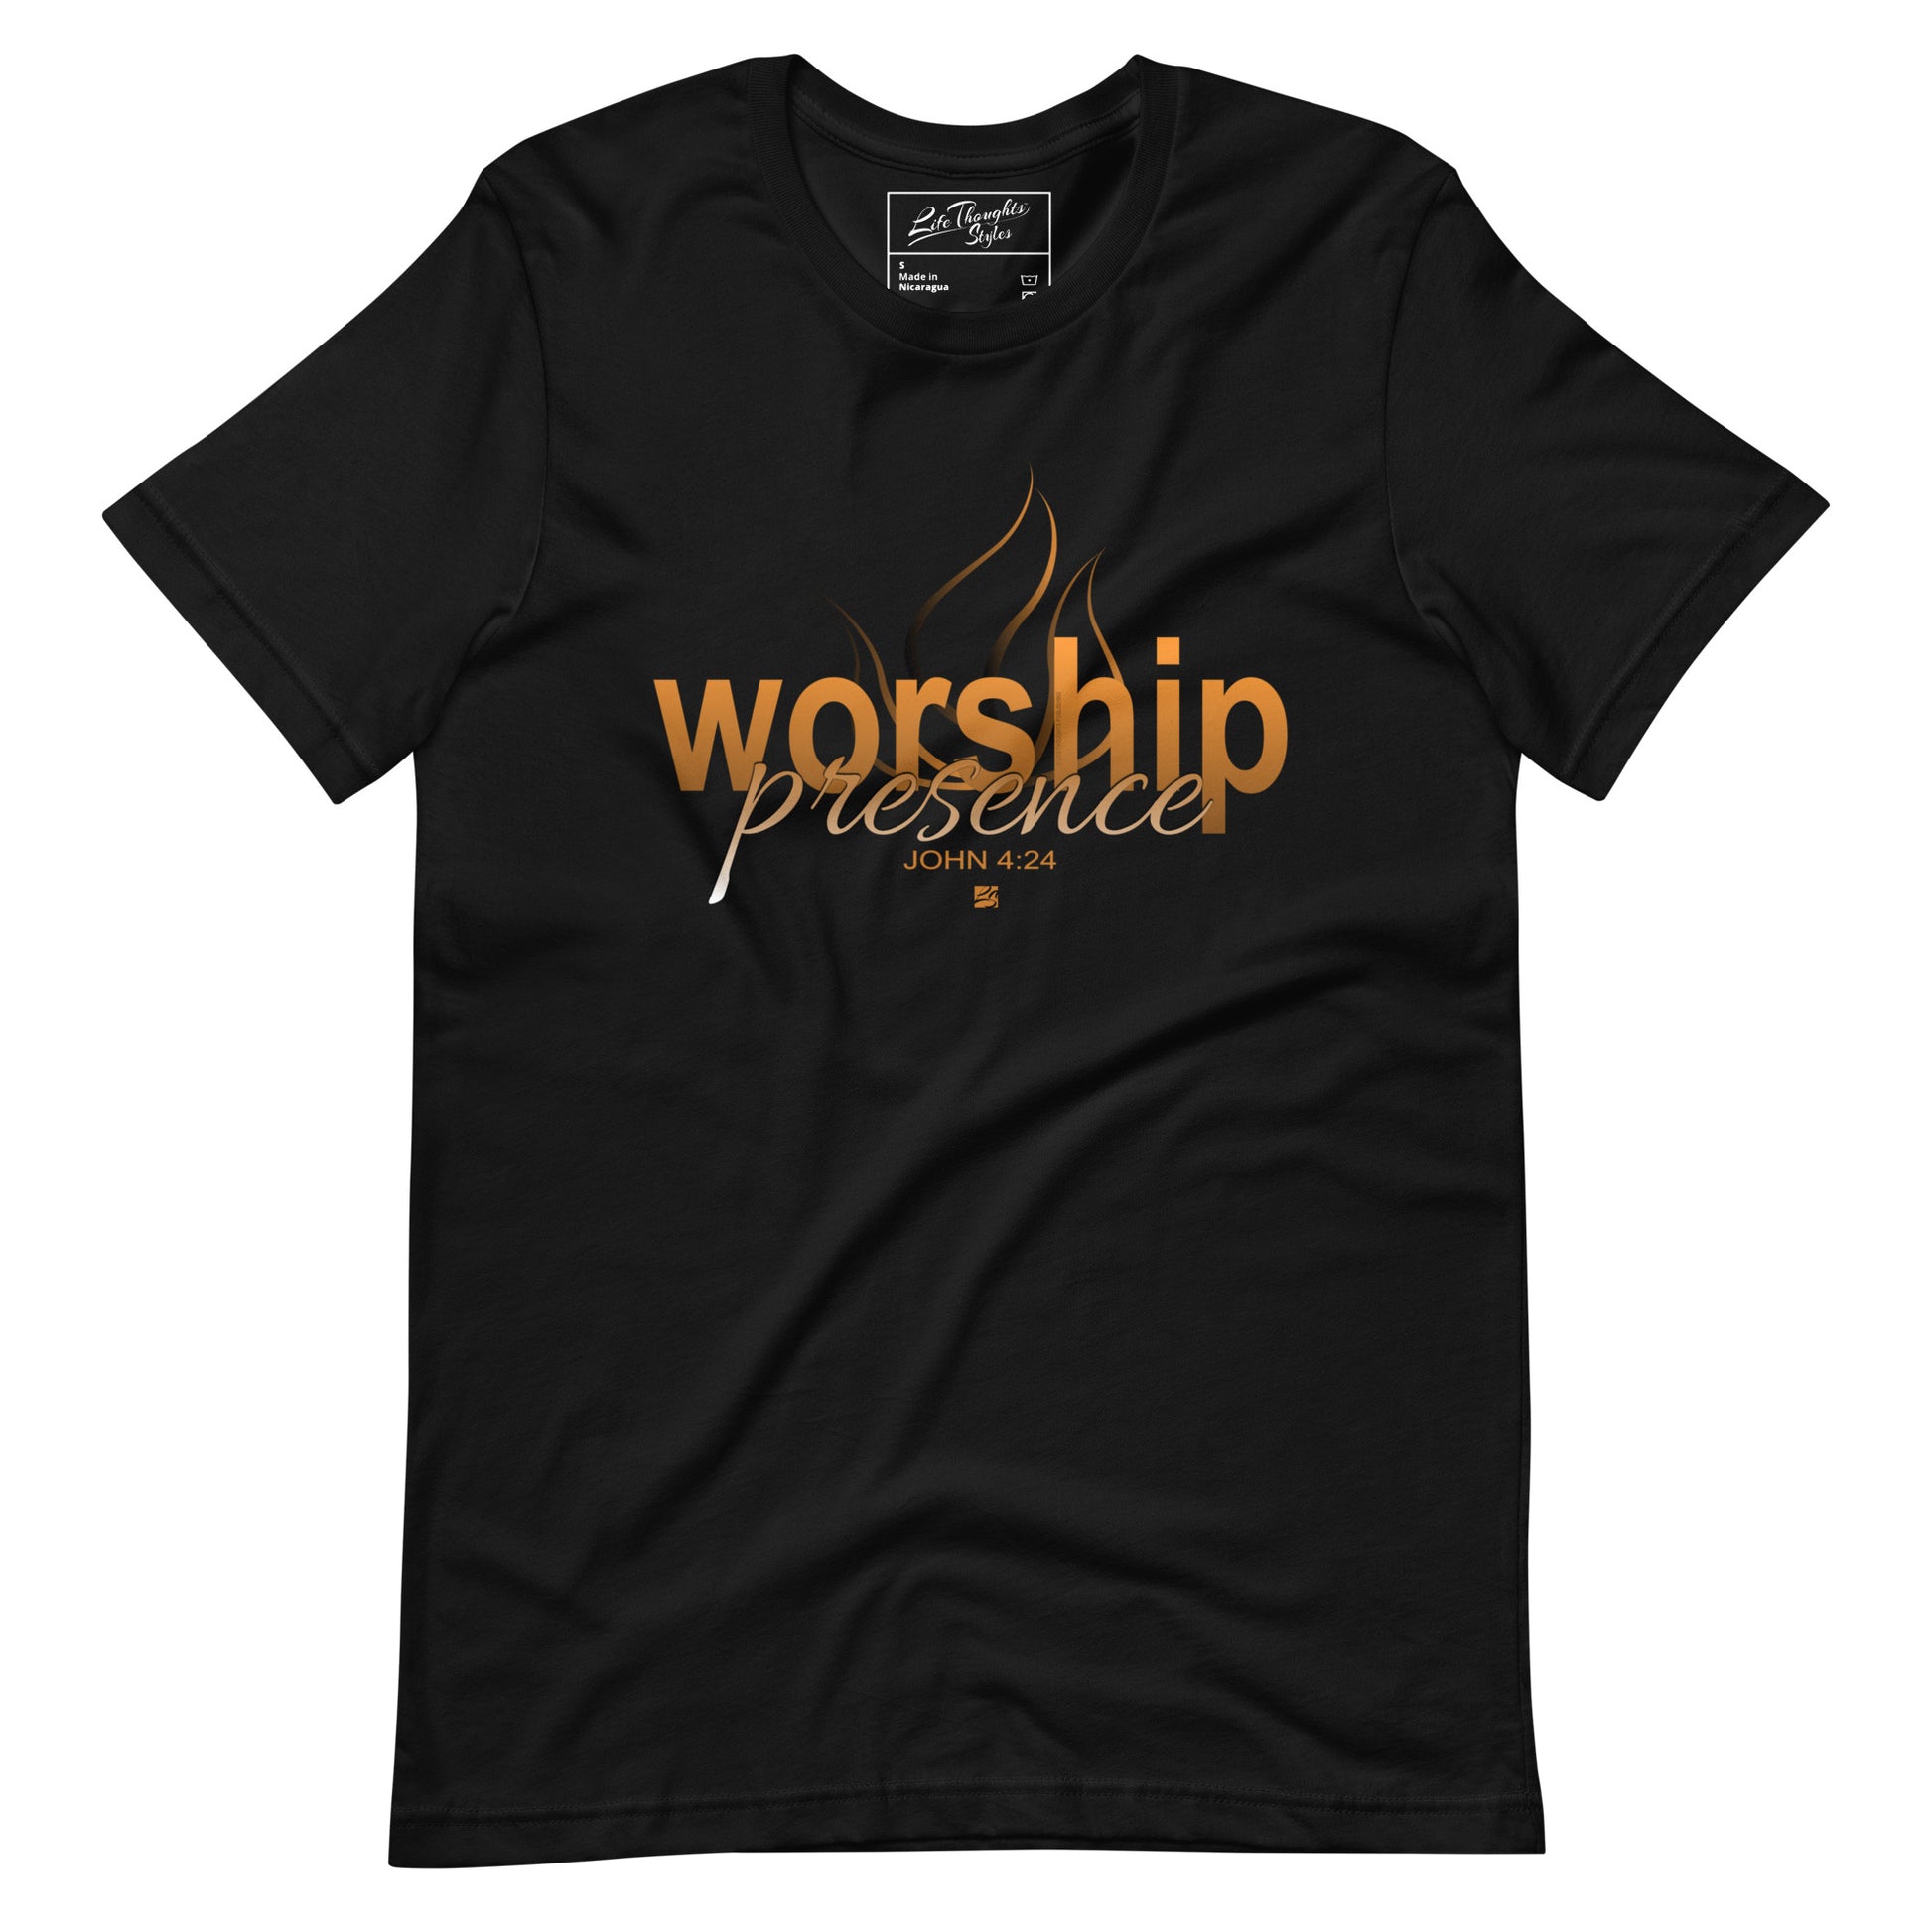 Worship Presence John 4:24 Tee